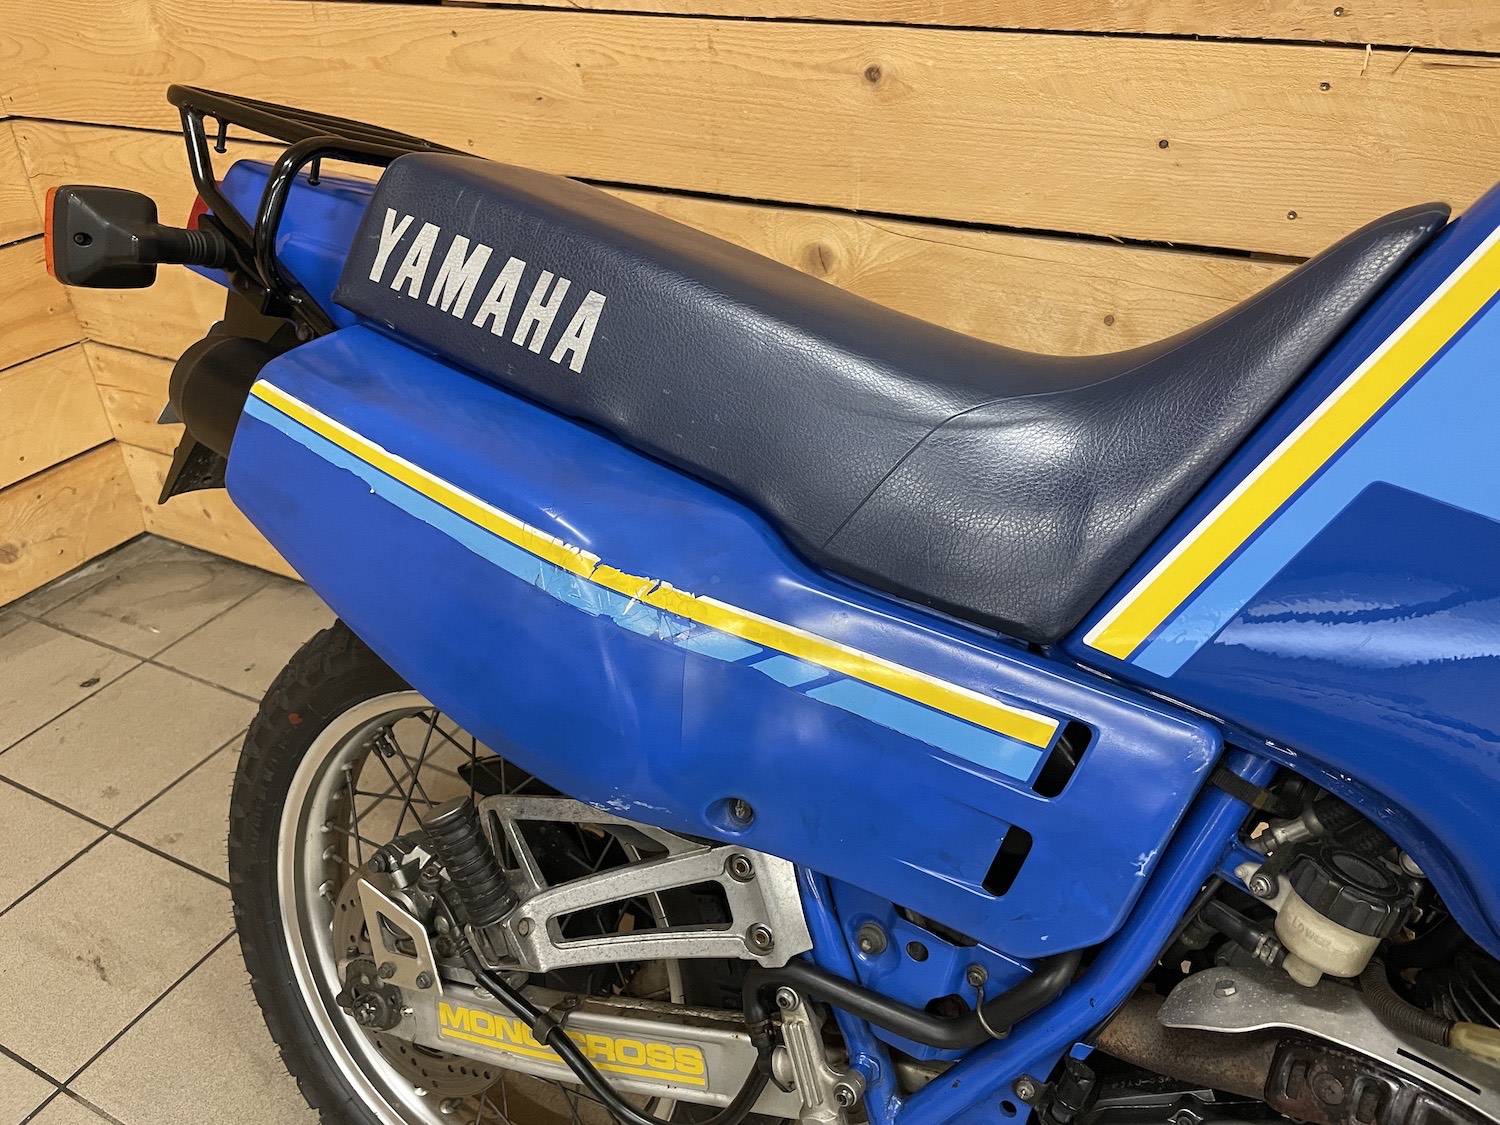 Yamaha_XT600Z_Tenere_cezanne_classic_motorcycle_8-114.jpg